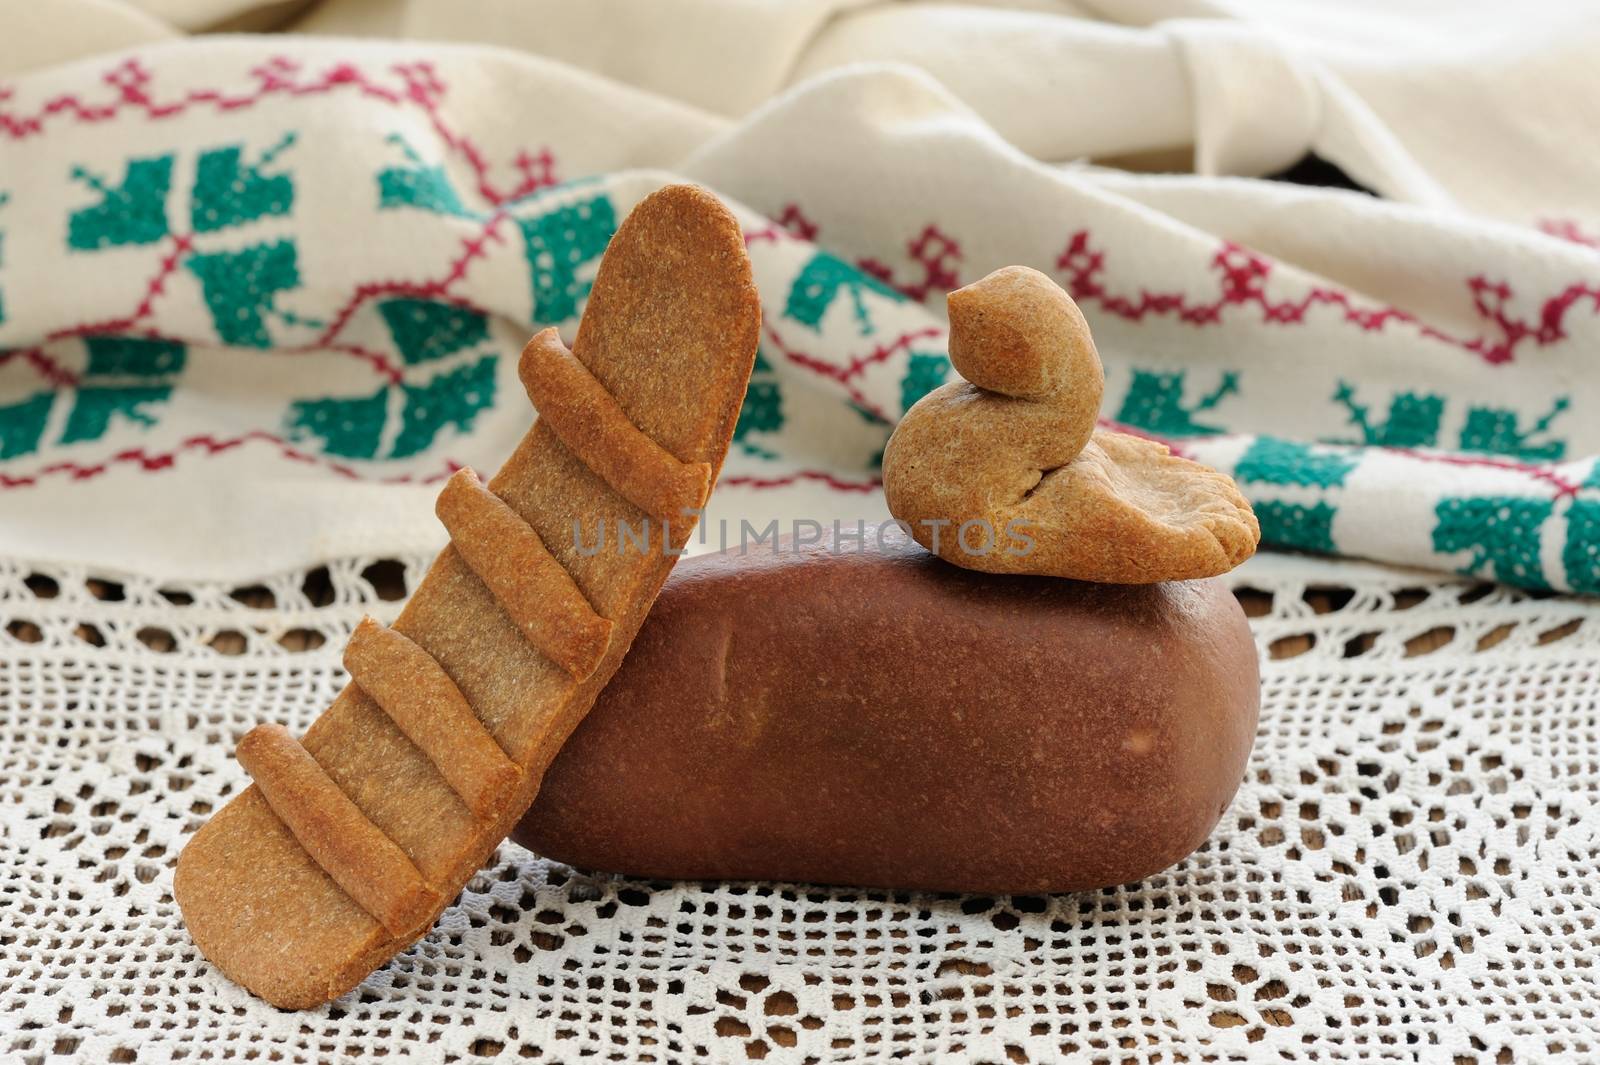 Lestvitsa and zhavoronok, Russian rye festive spring cookies on handmade rushnik horizontal